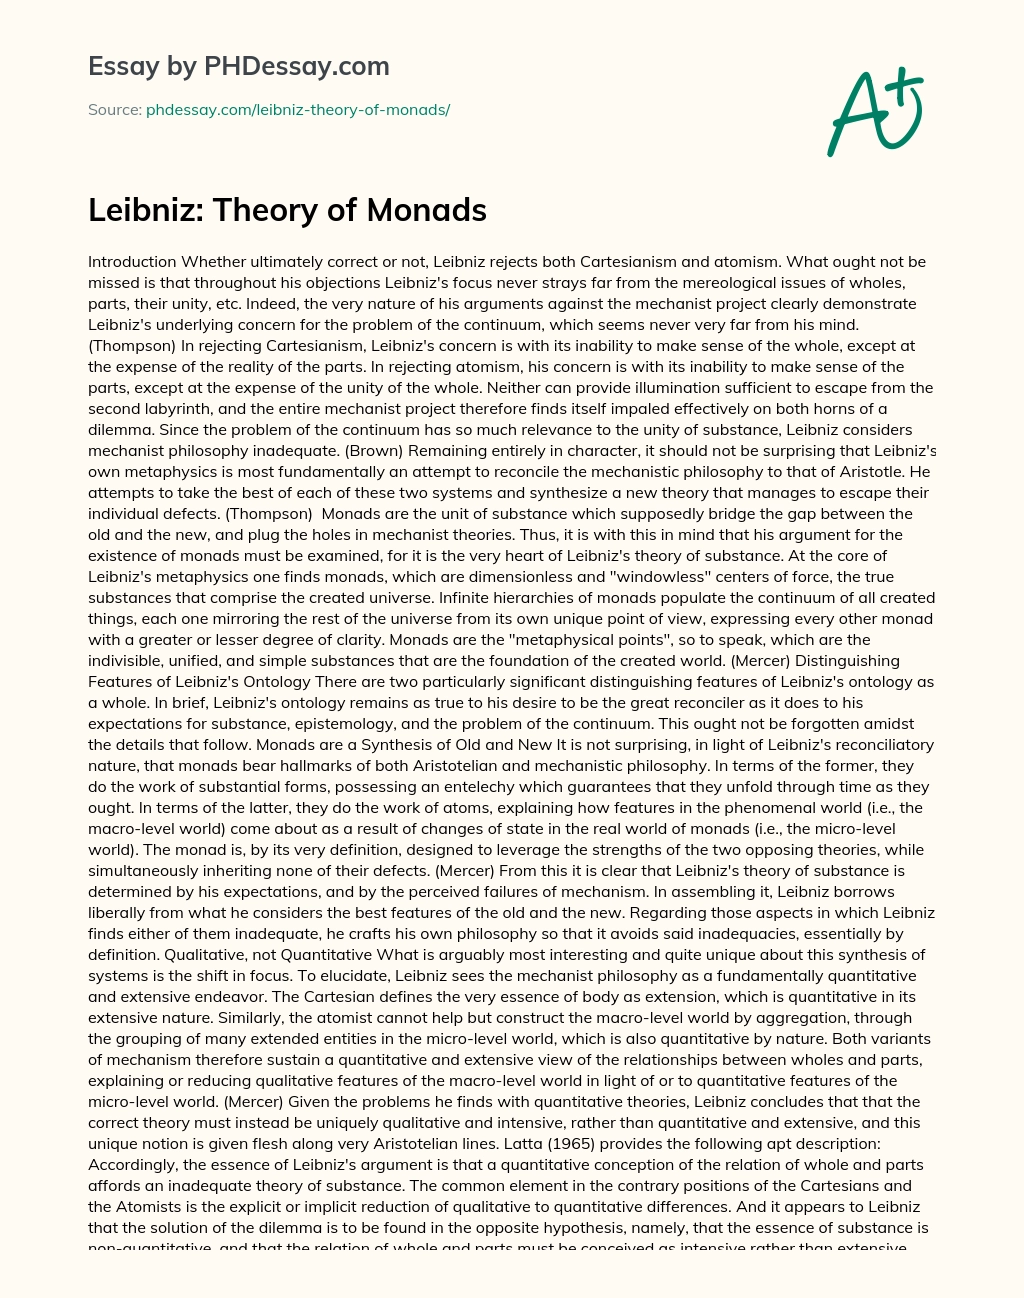 Leibniz: Theory of Monads essay